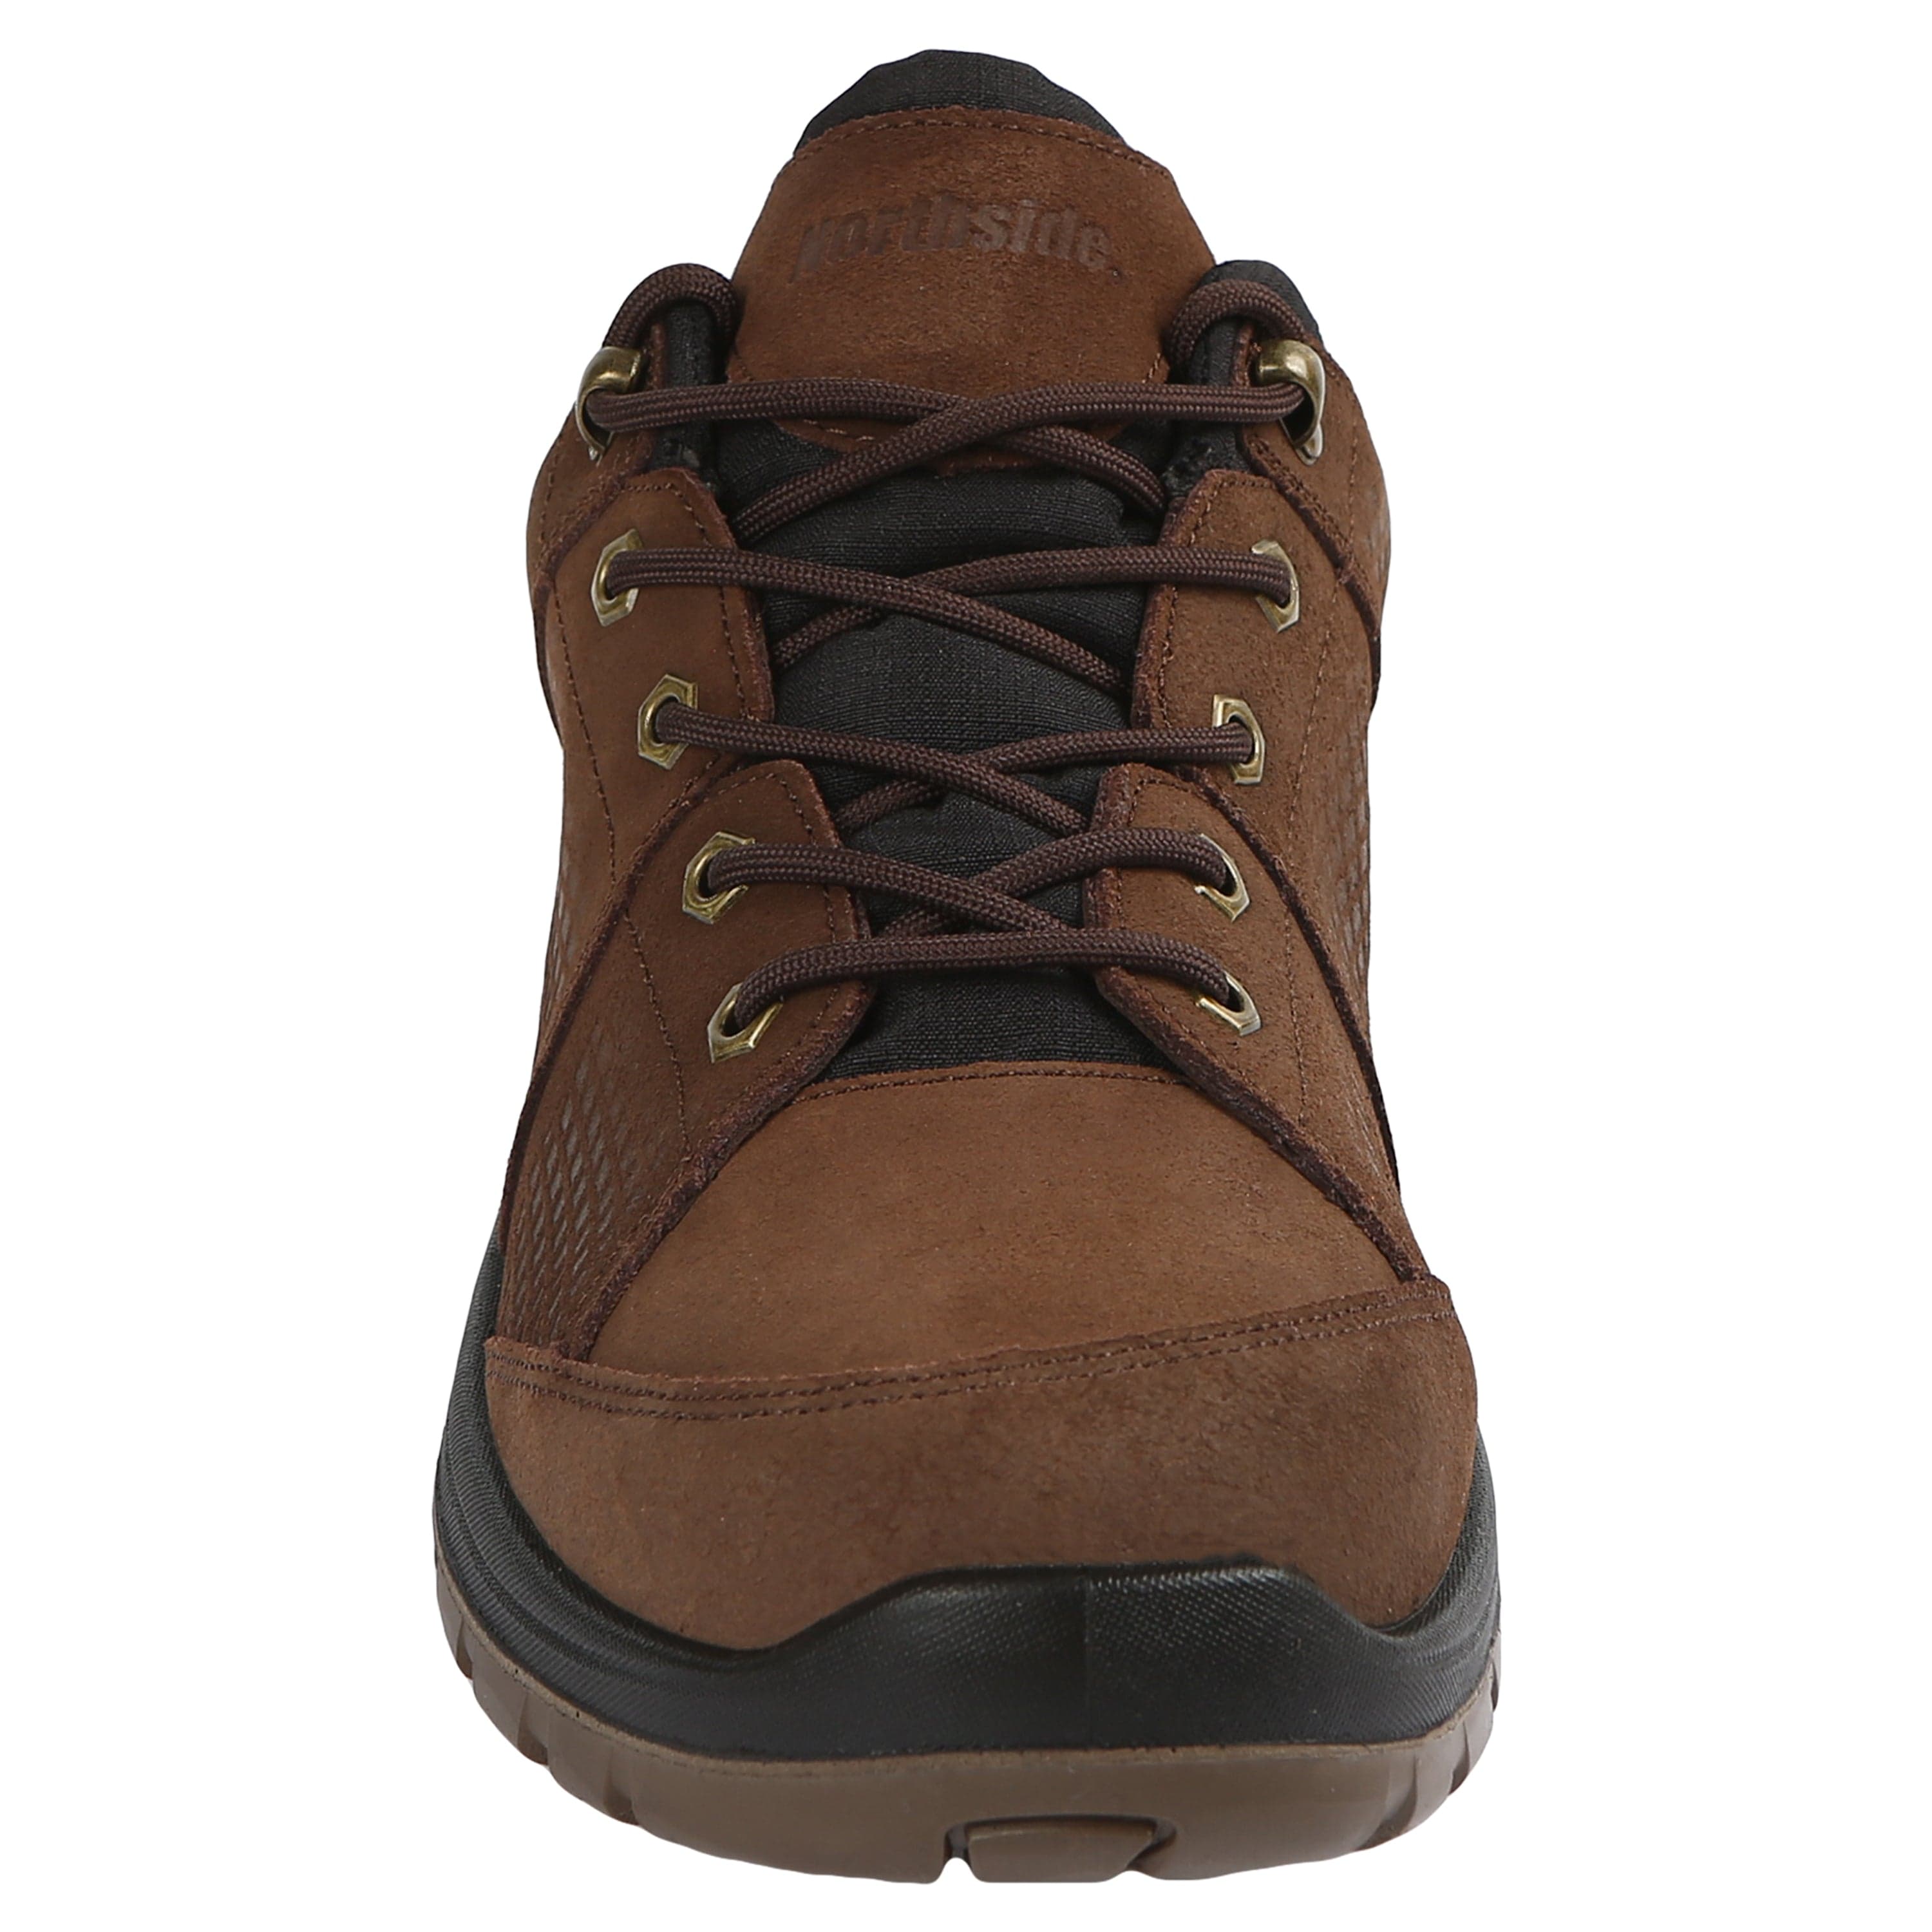 Men's Rockford Waterproof Leather Hiking Shoe - Northside USA